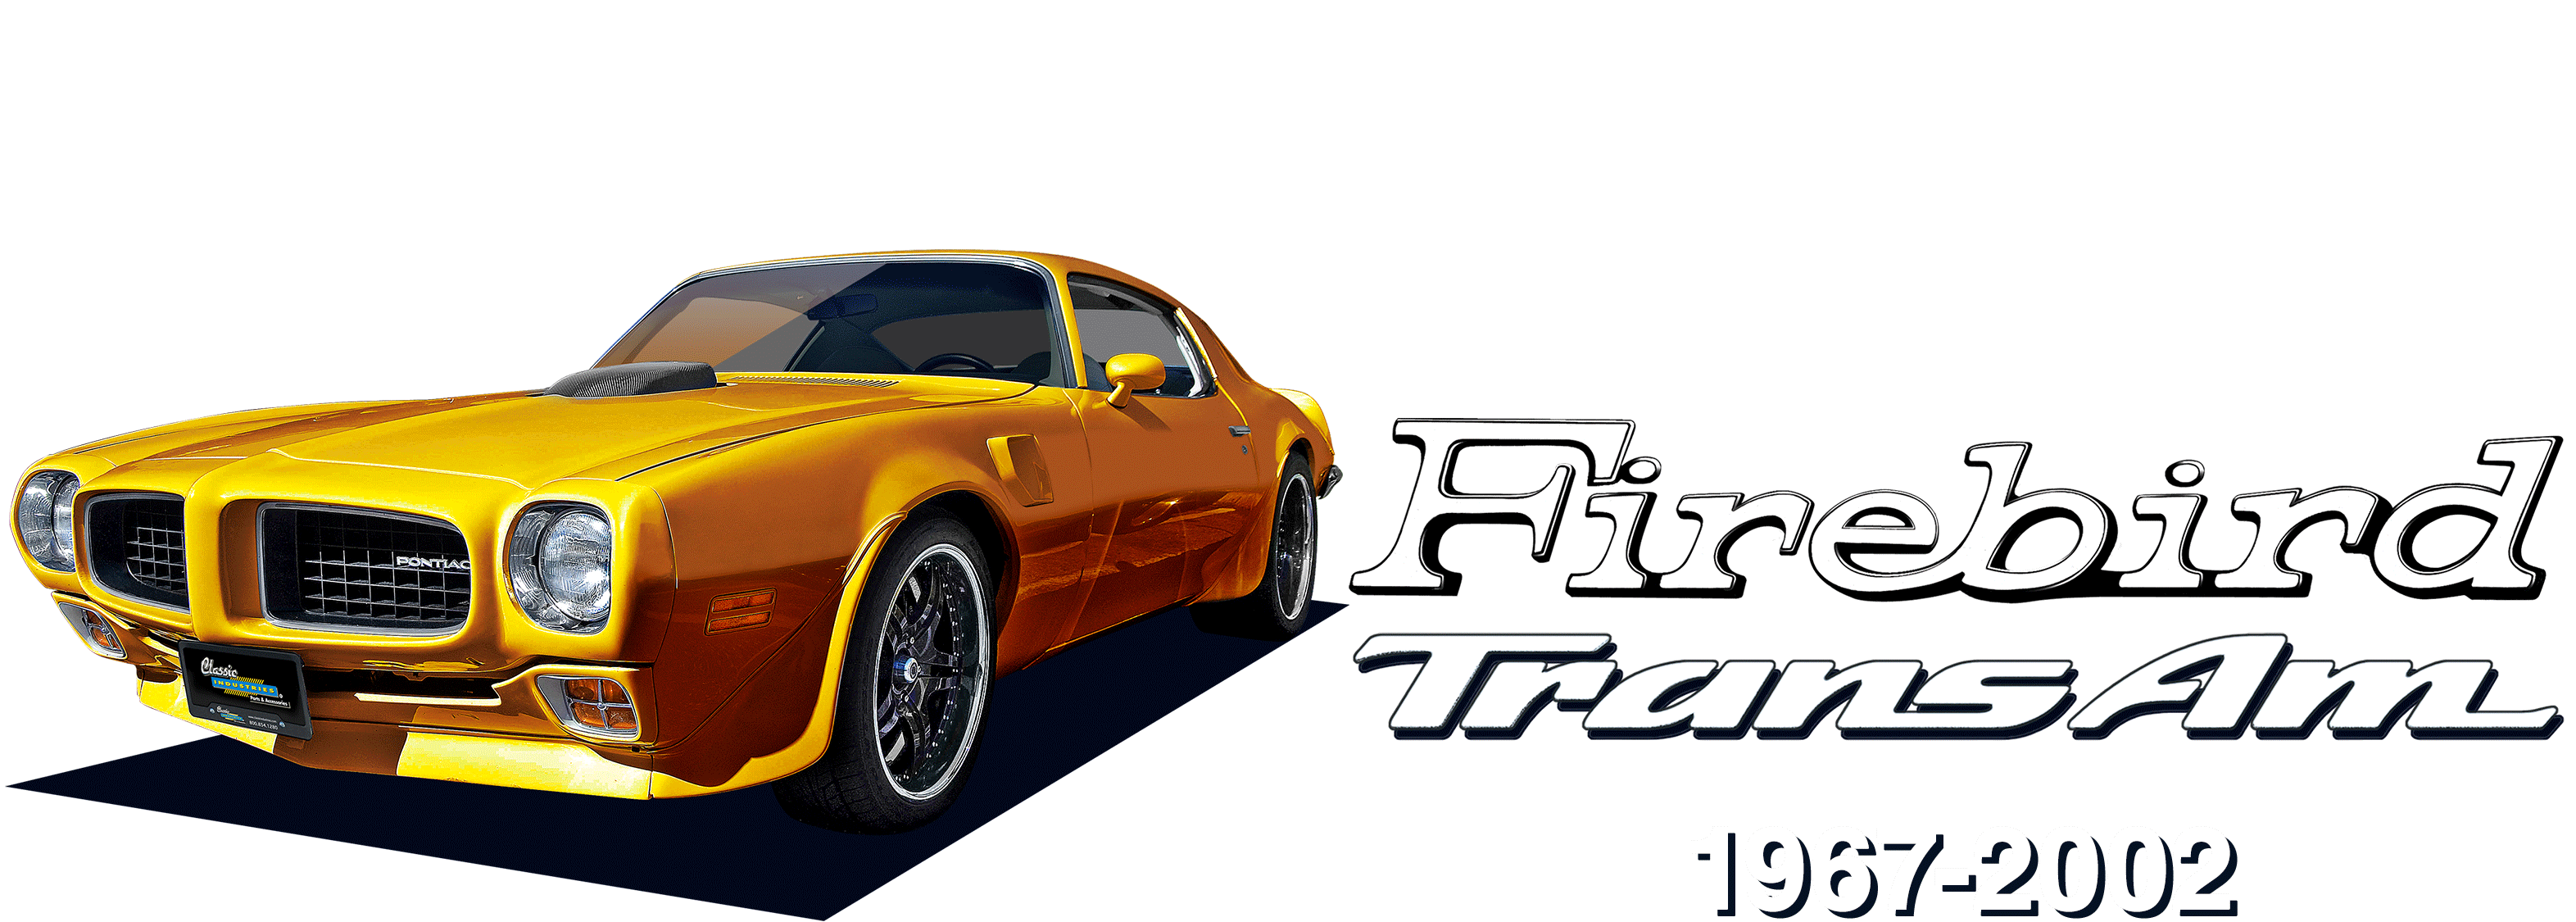 Firebird-Prod-Vehicle-desktop